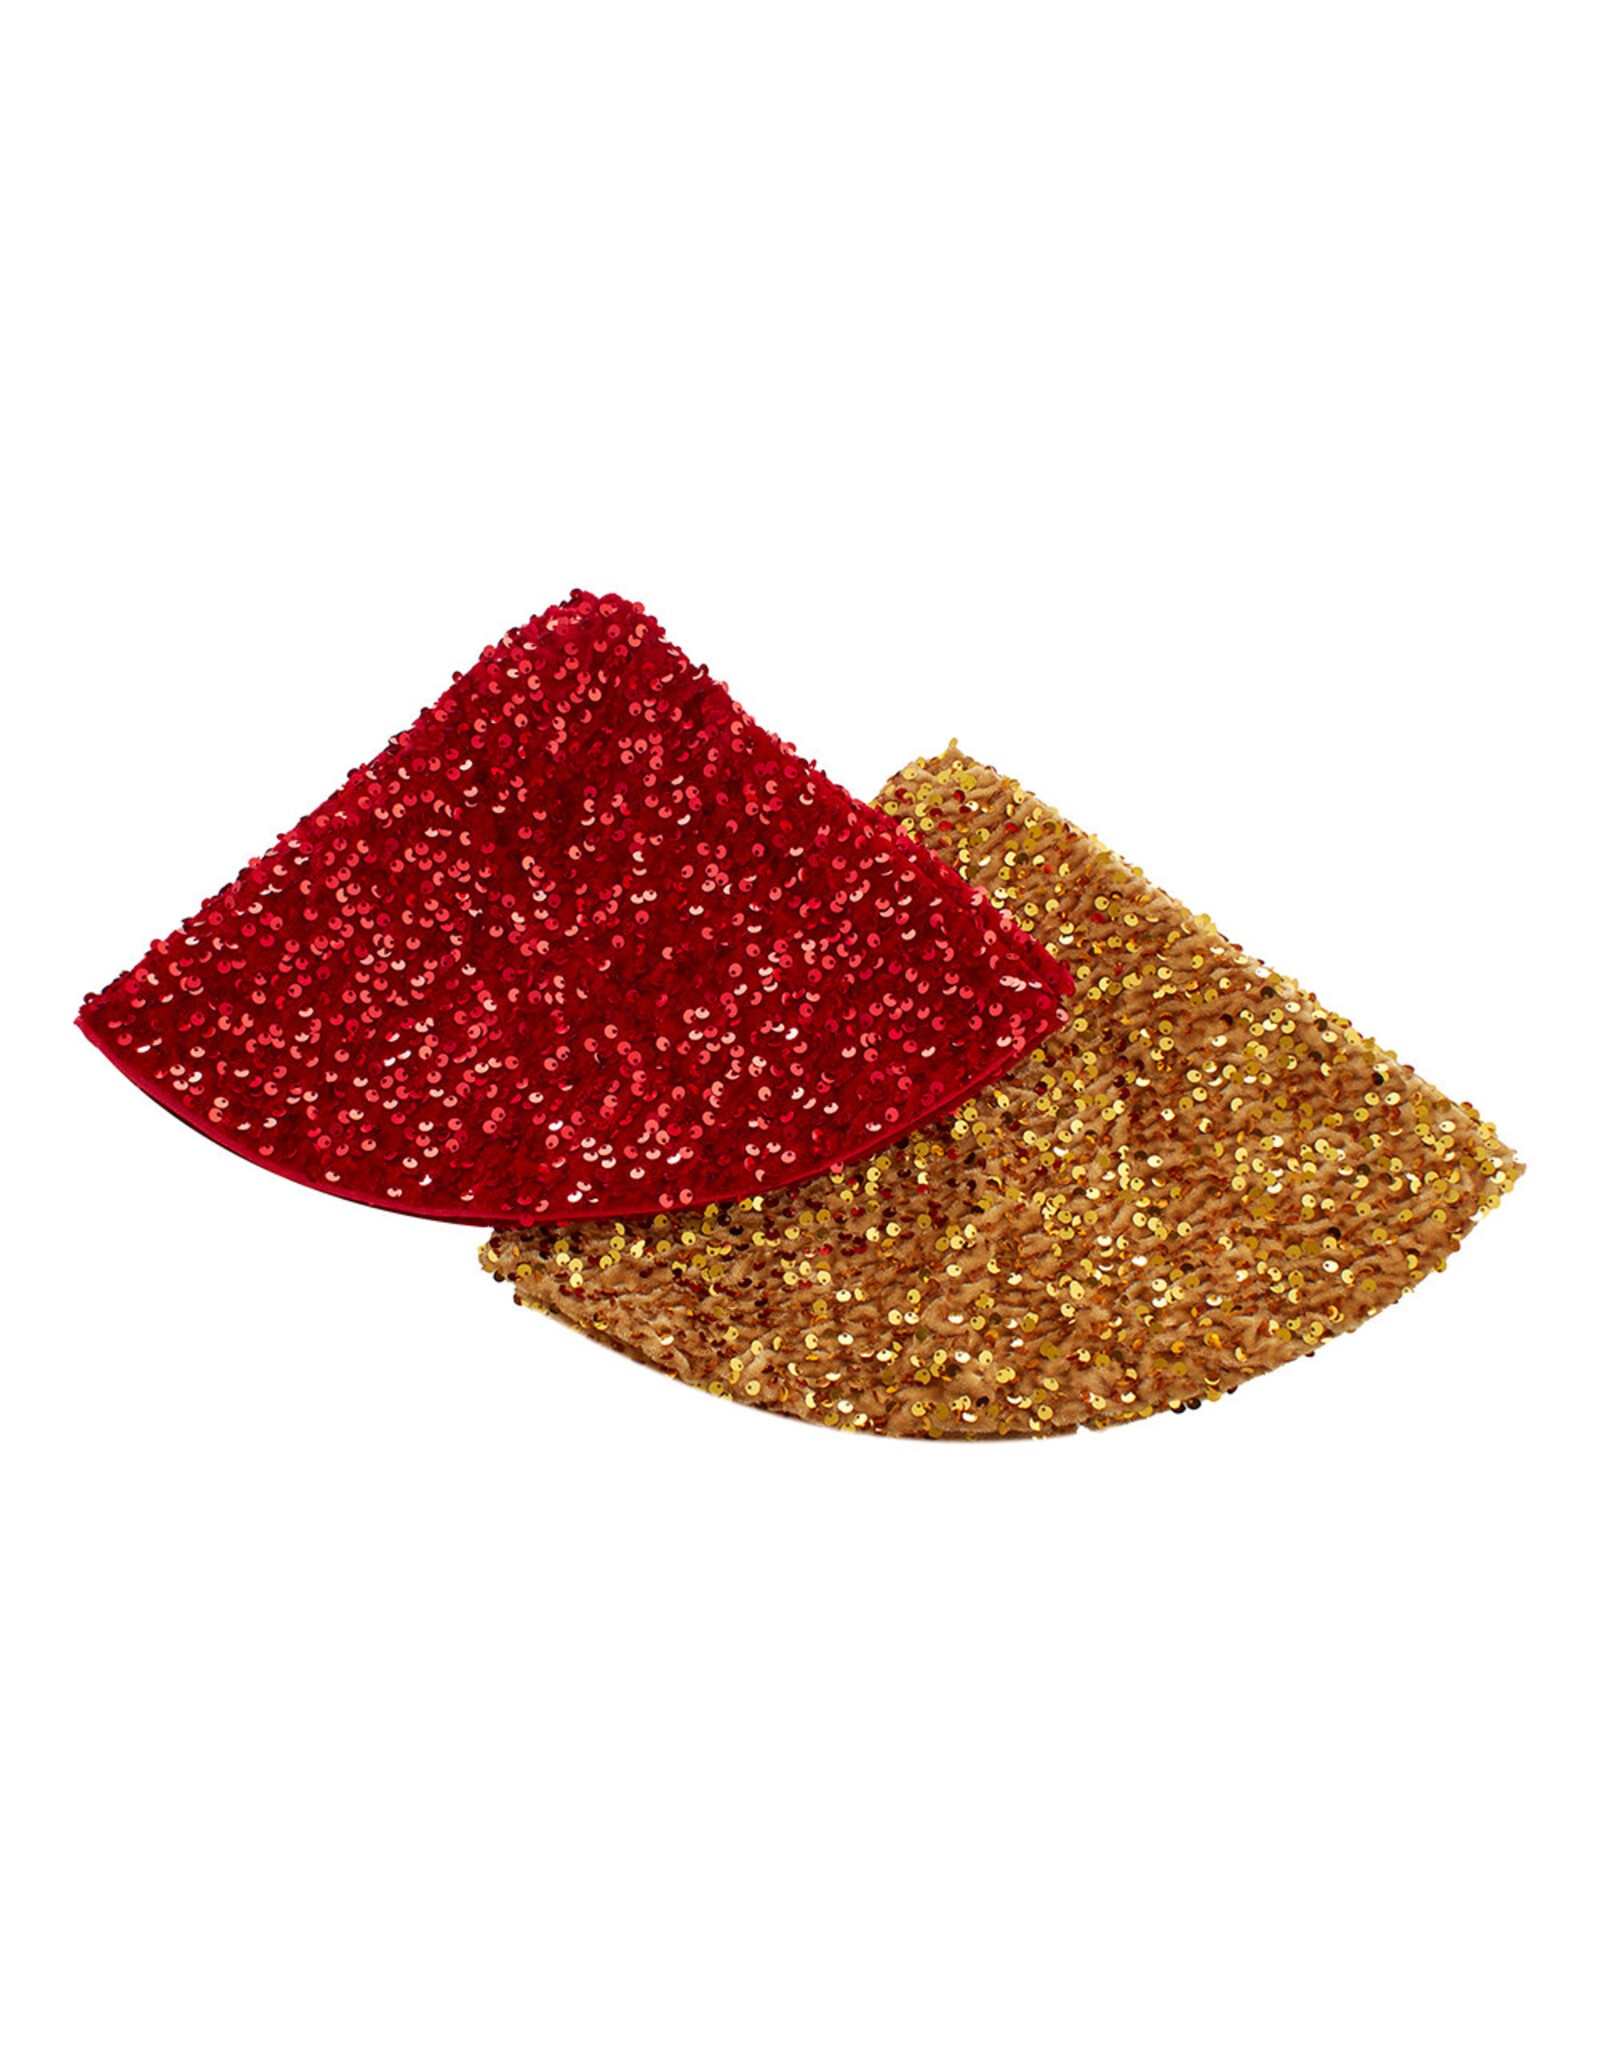 Kurt Adler Christmas Tree Skirts 20” 2 Astd Red & Gold Sequined